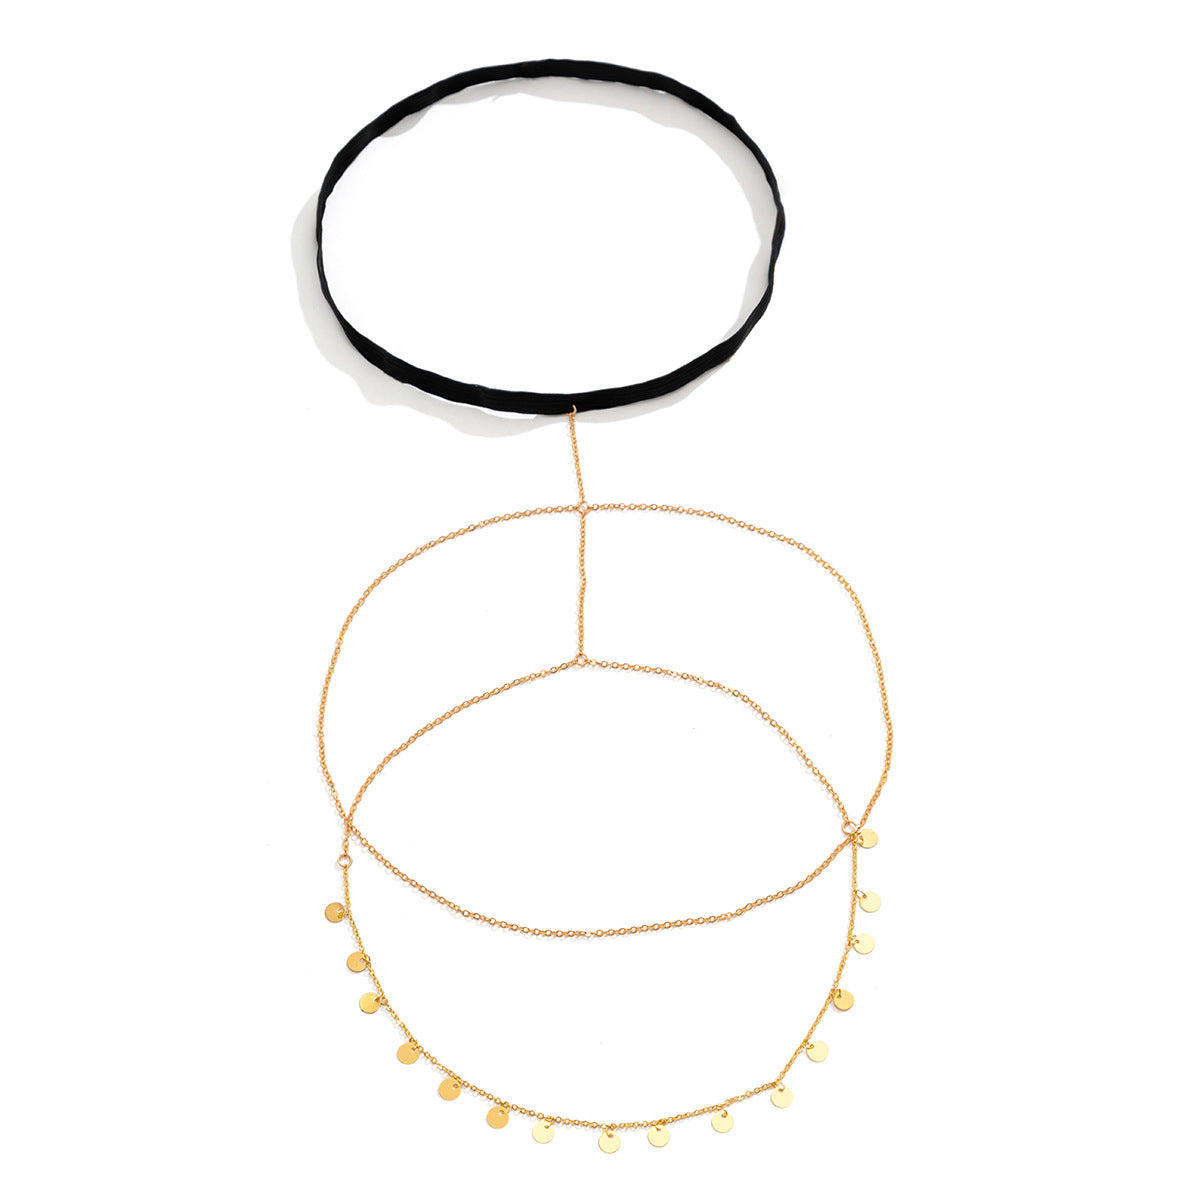 Jewelry Elastic Chain Geometric Body Chain Simple